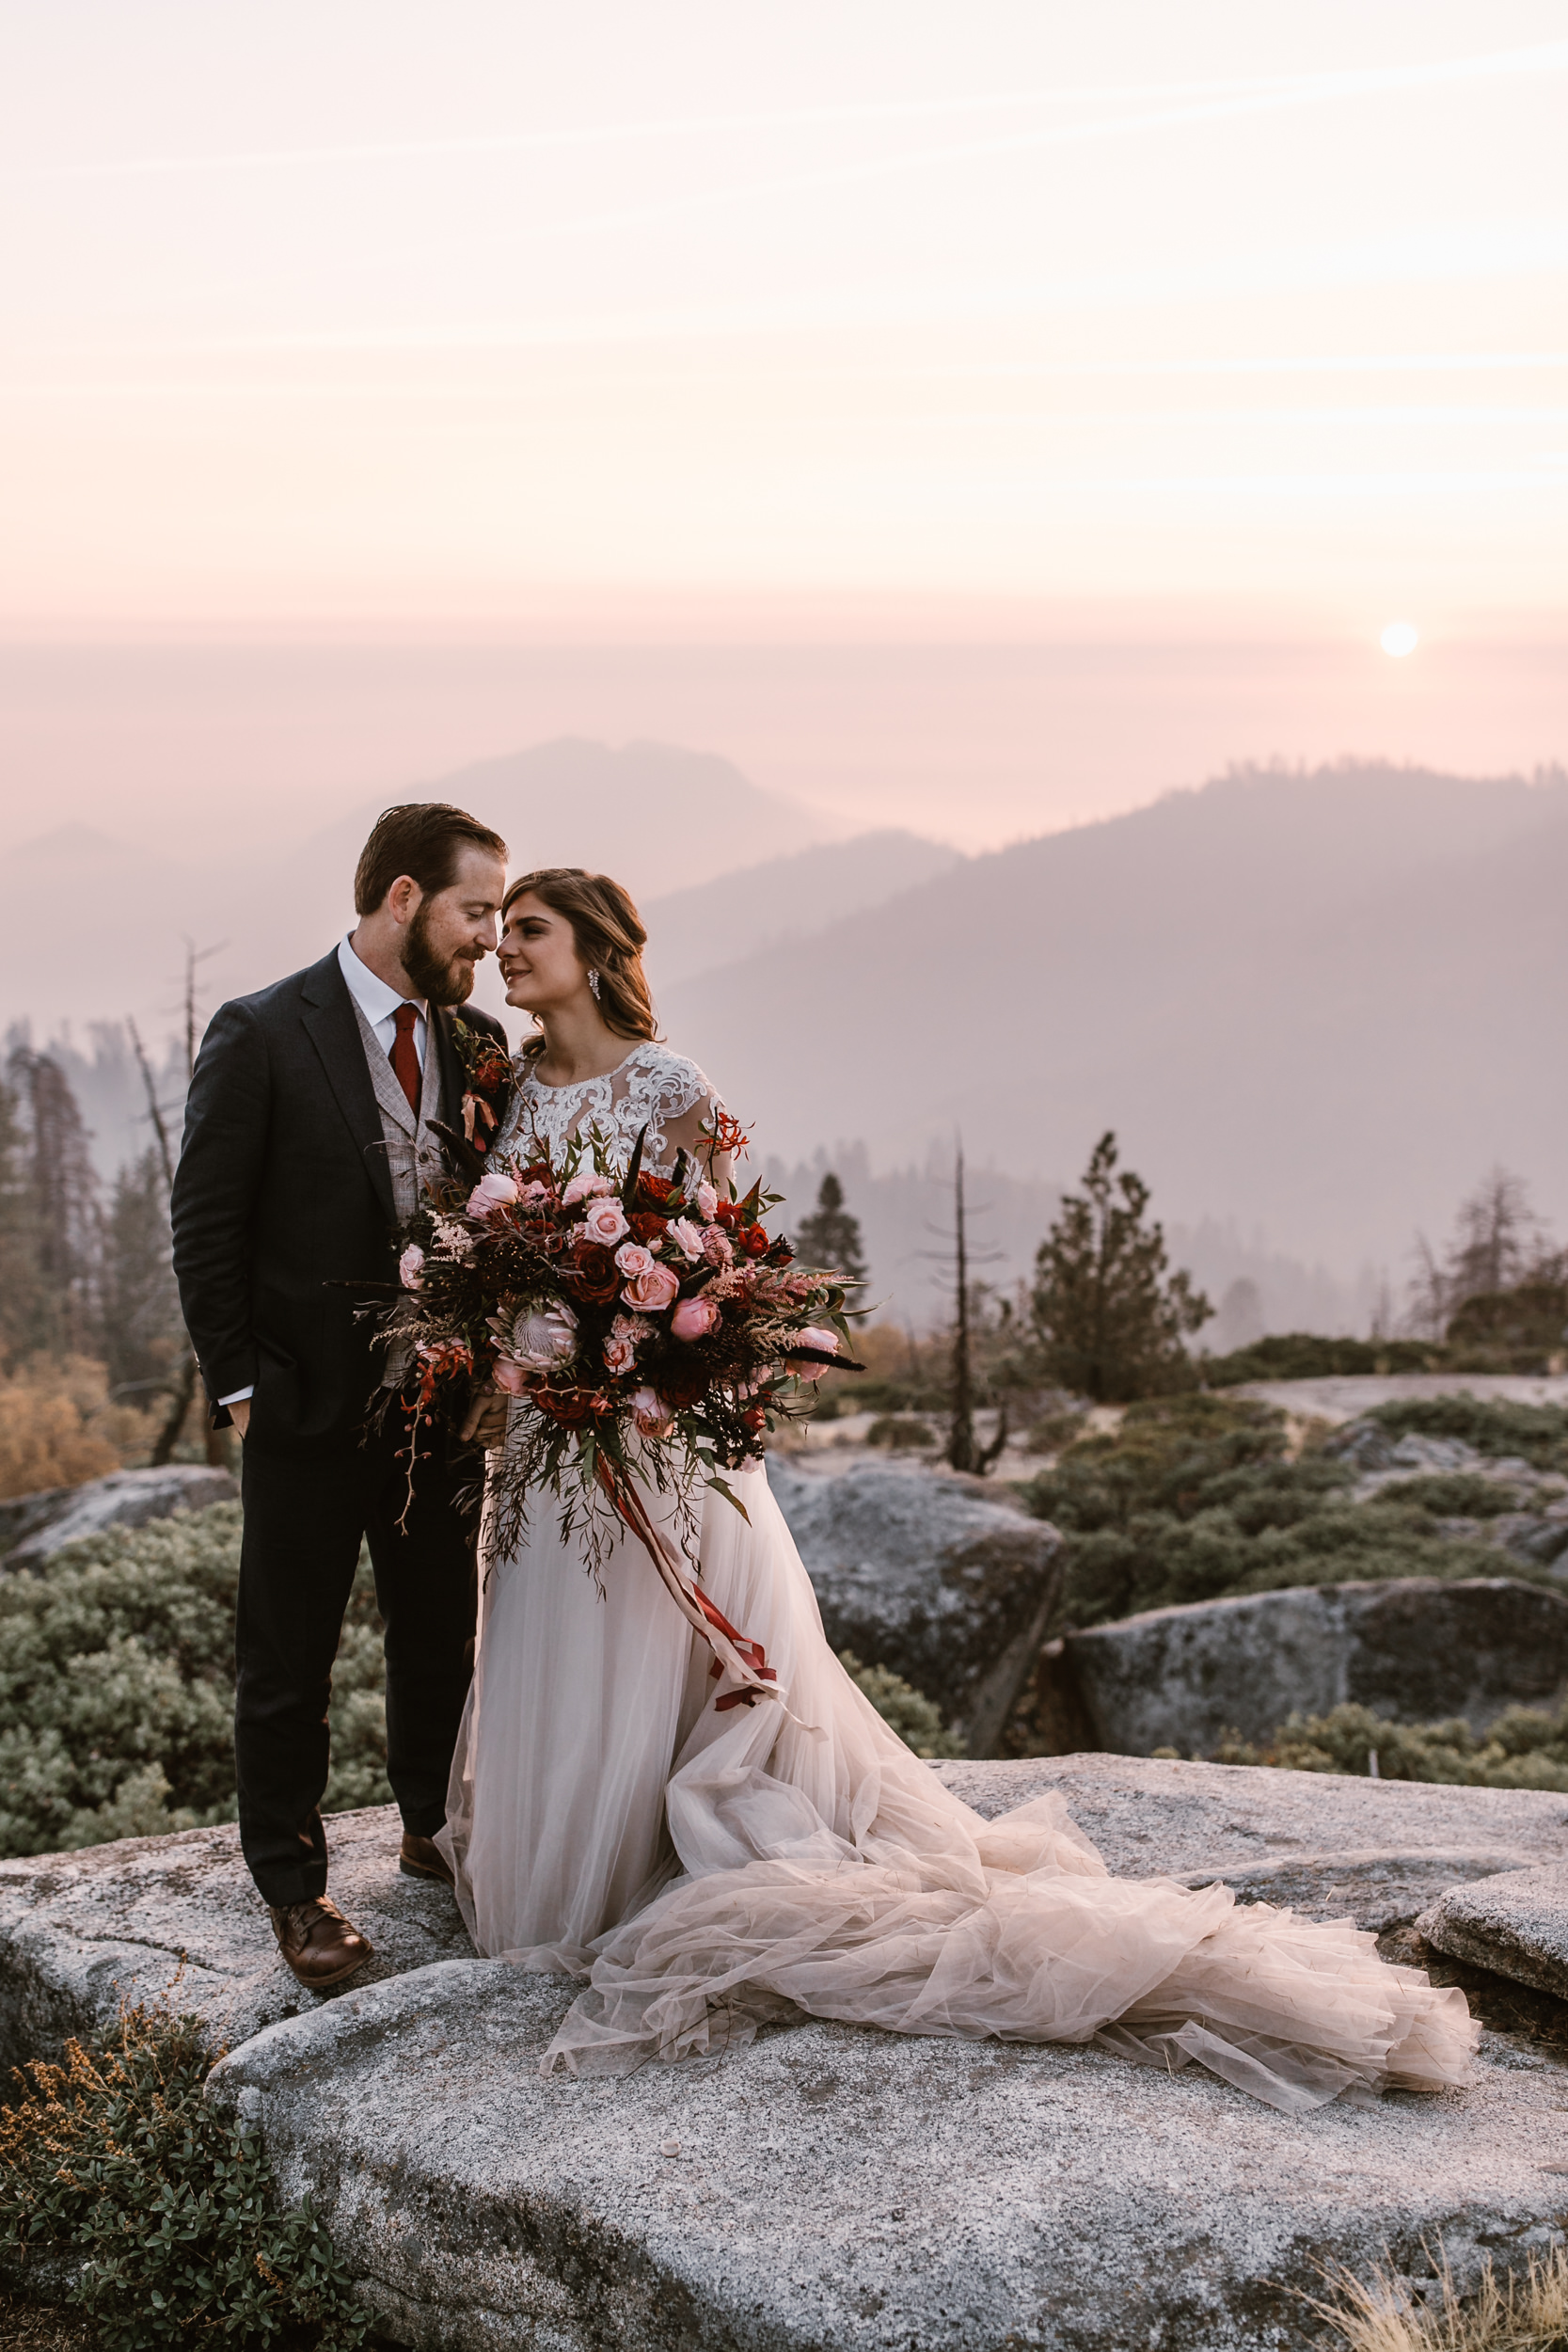 elopement wedding in sequoia national park | adventure weddings in california | the hearnes adventure photography 